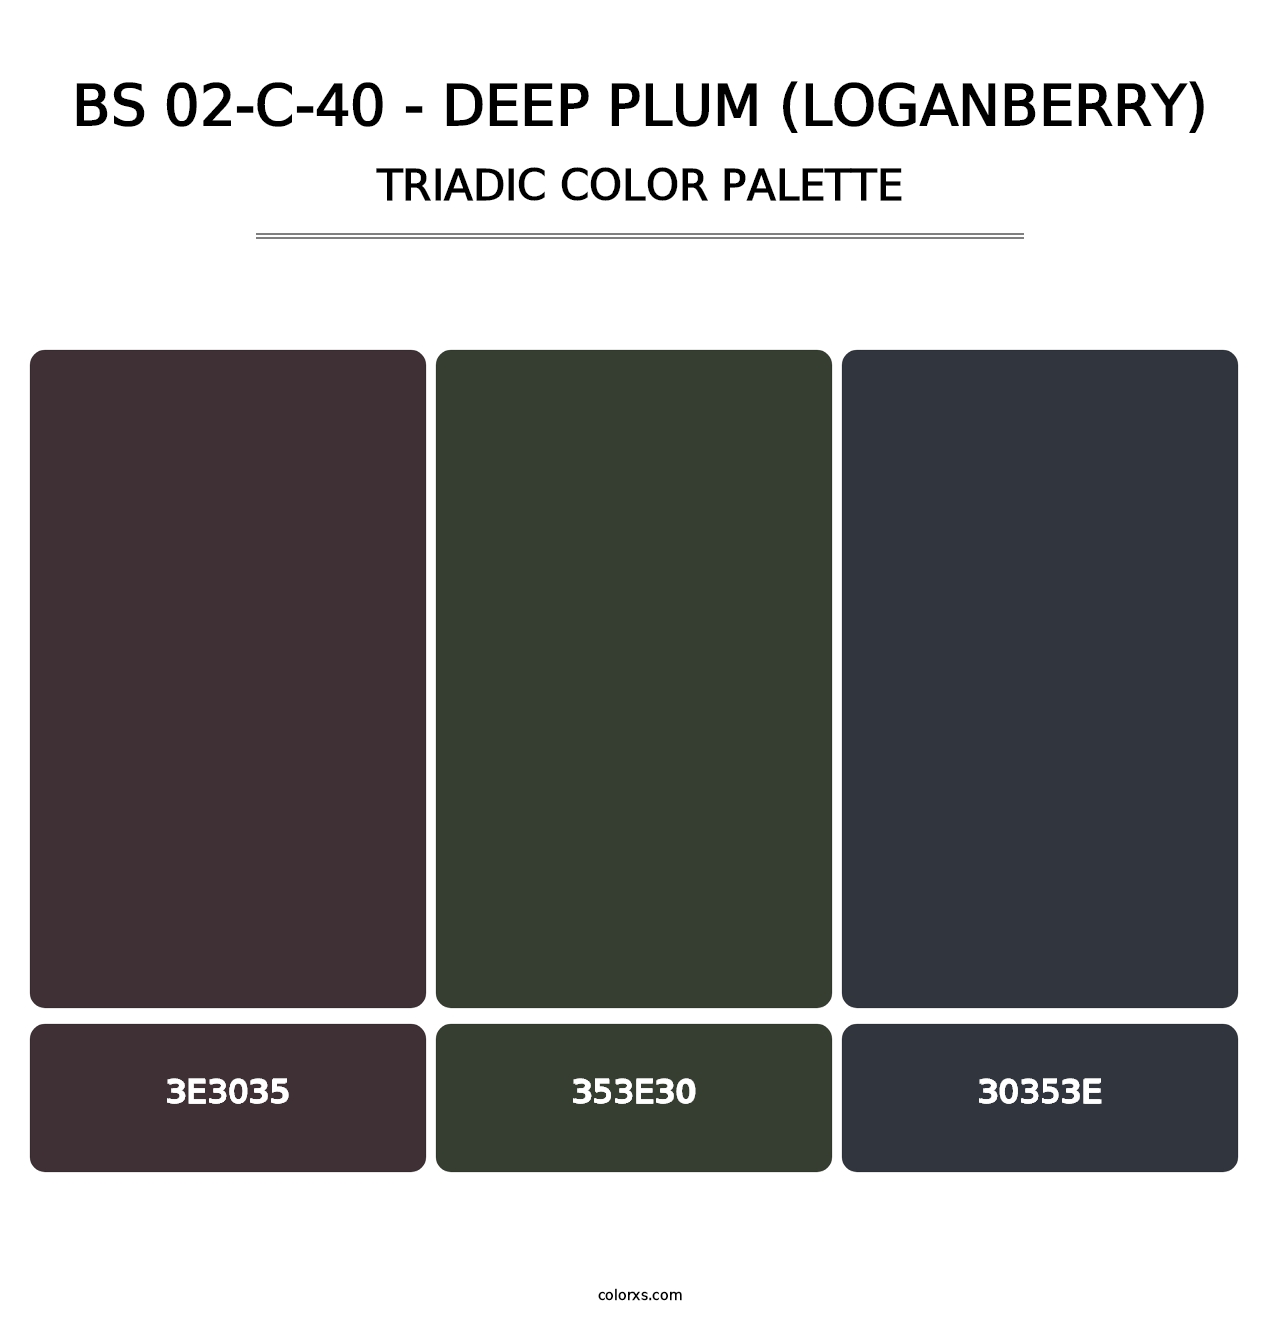 BS 02-C-40 - Deep Plum (Loganberry) - Triadic Color Palette